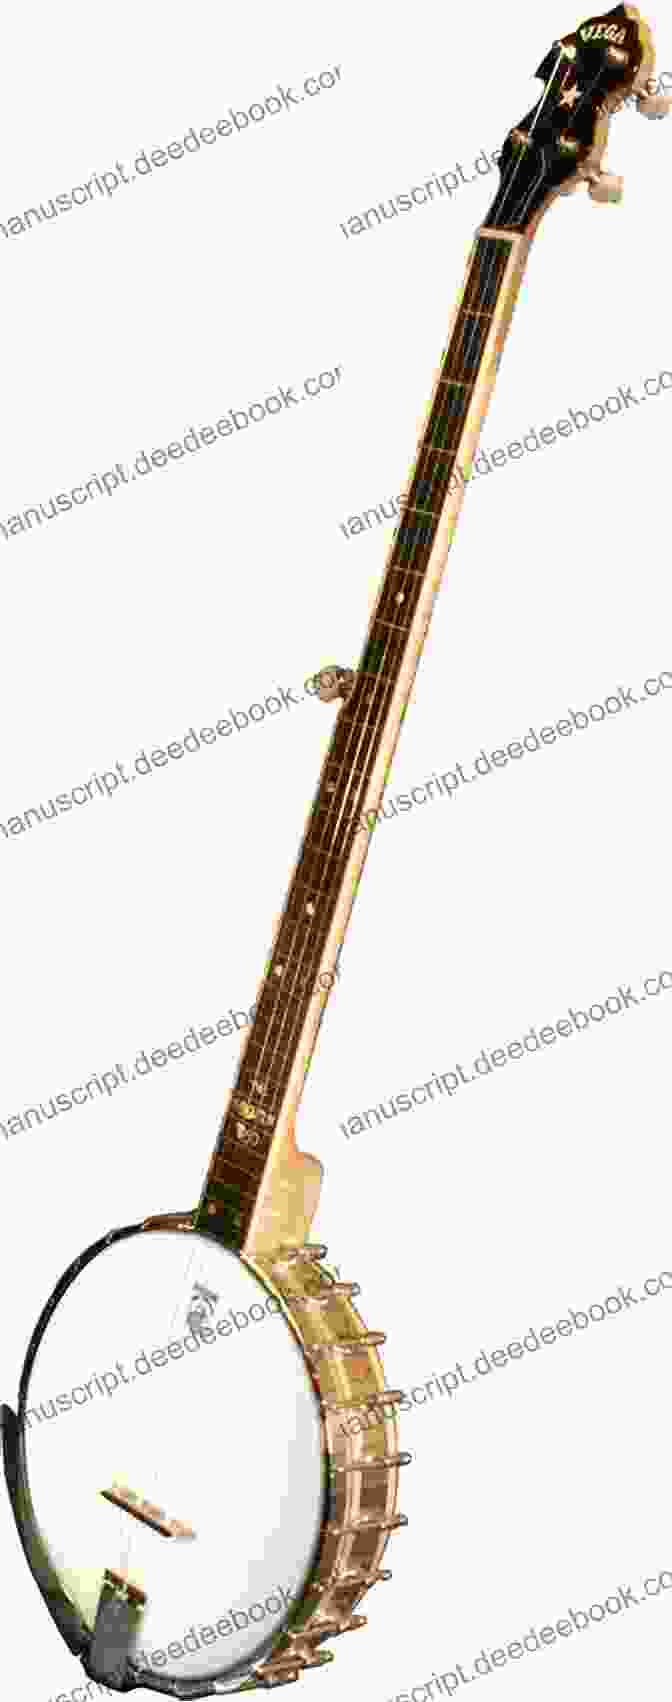 A Banjo With A Circular Body, A Long Neck, And A Resonator Pop Standards Strum Together: Ukulele Baritone Ukulele Guitar Mandolin Banjo